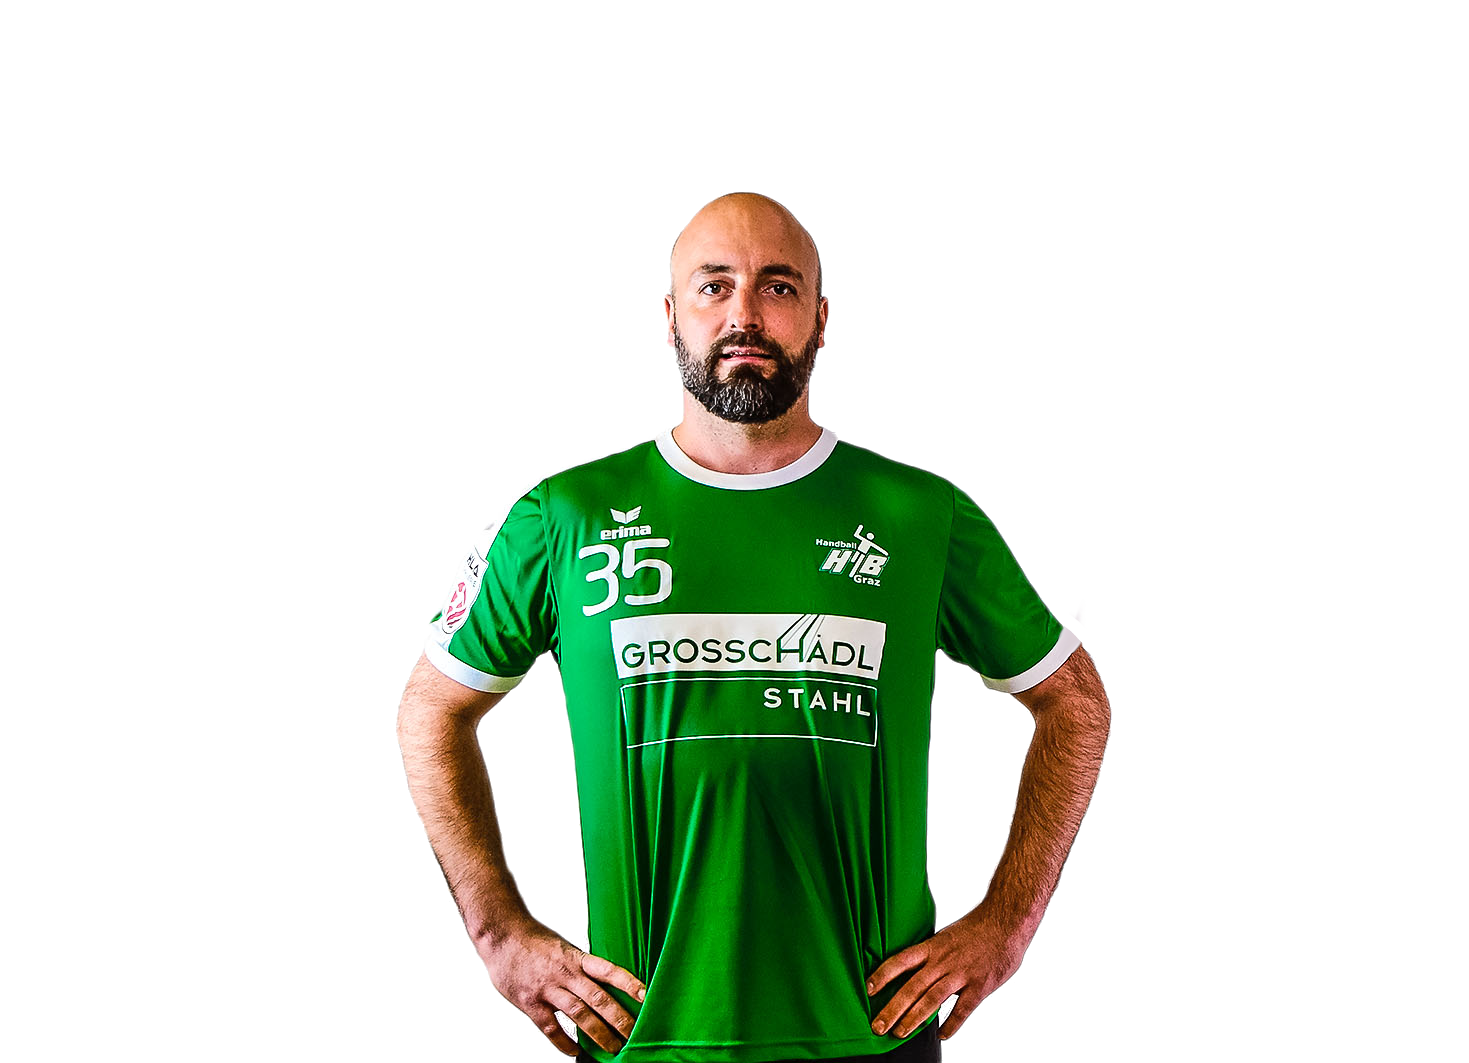 Georg Rothenburger jun.
Mini Mini Handball